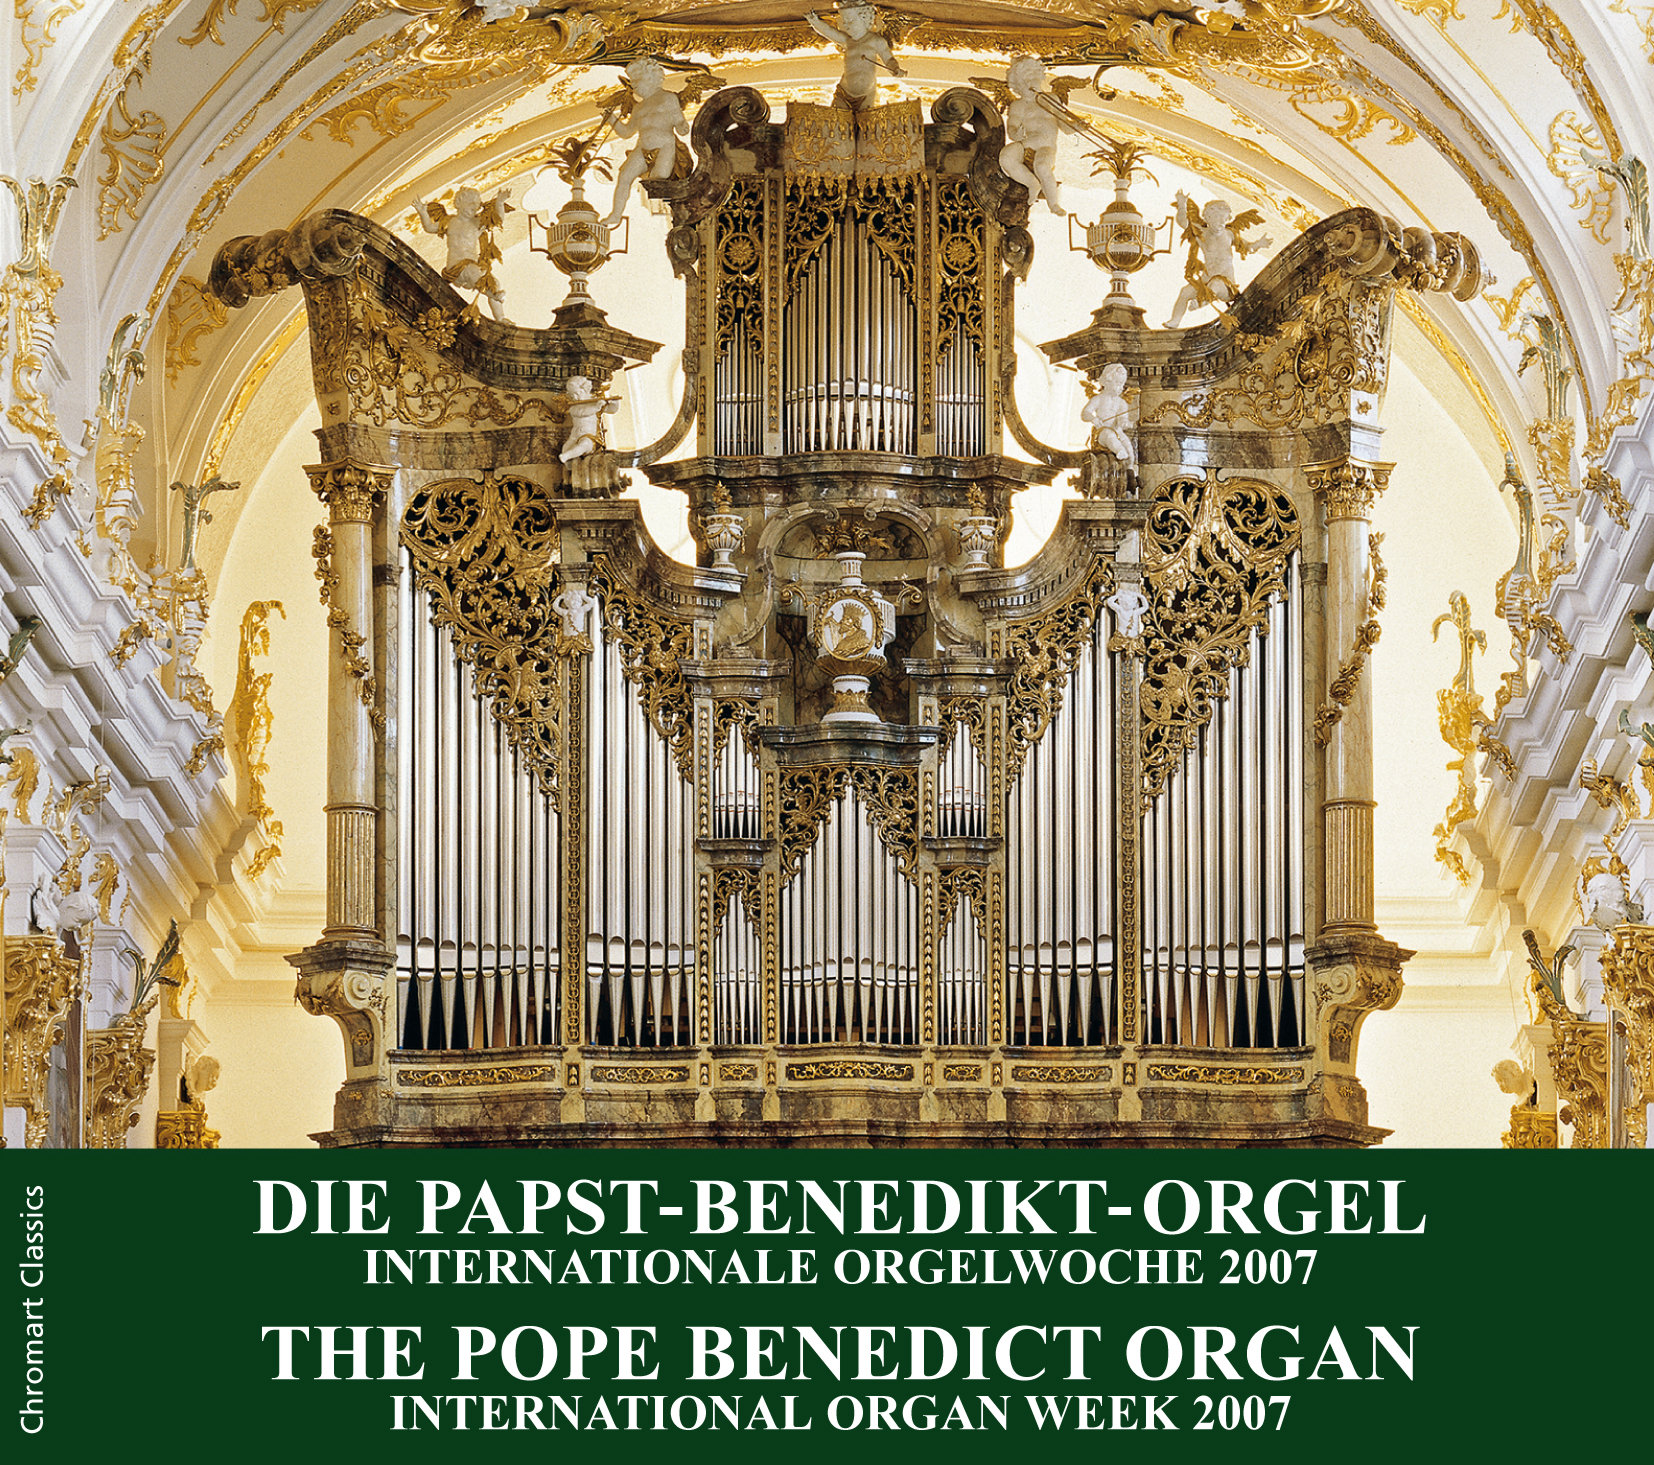 Pope Benedict Organ - Int. Organ Week 2007